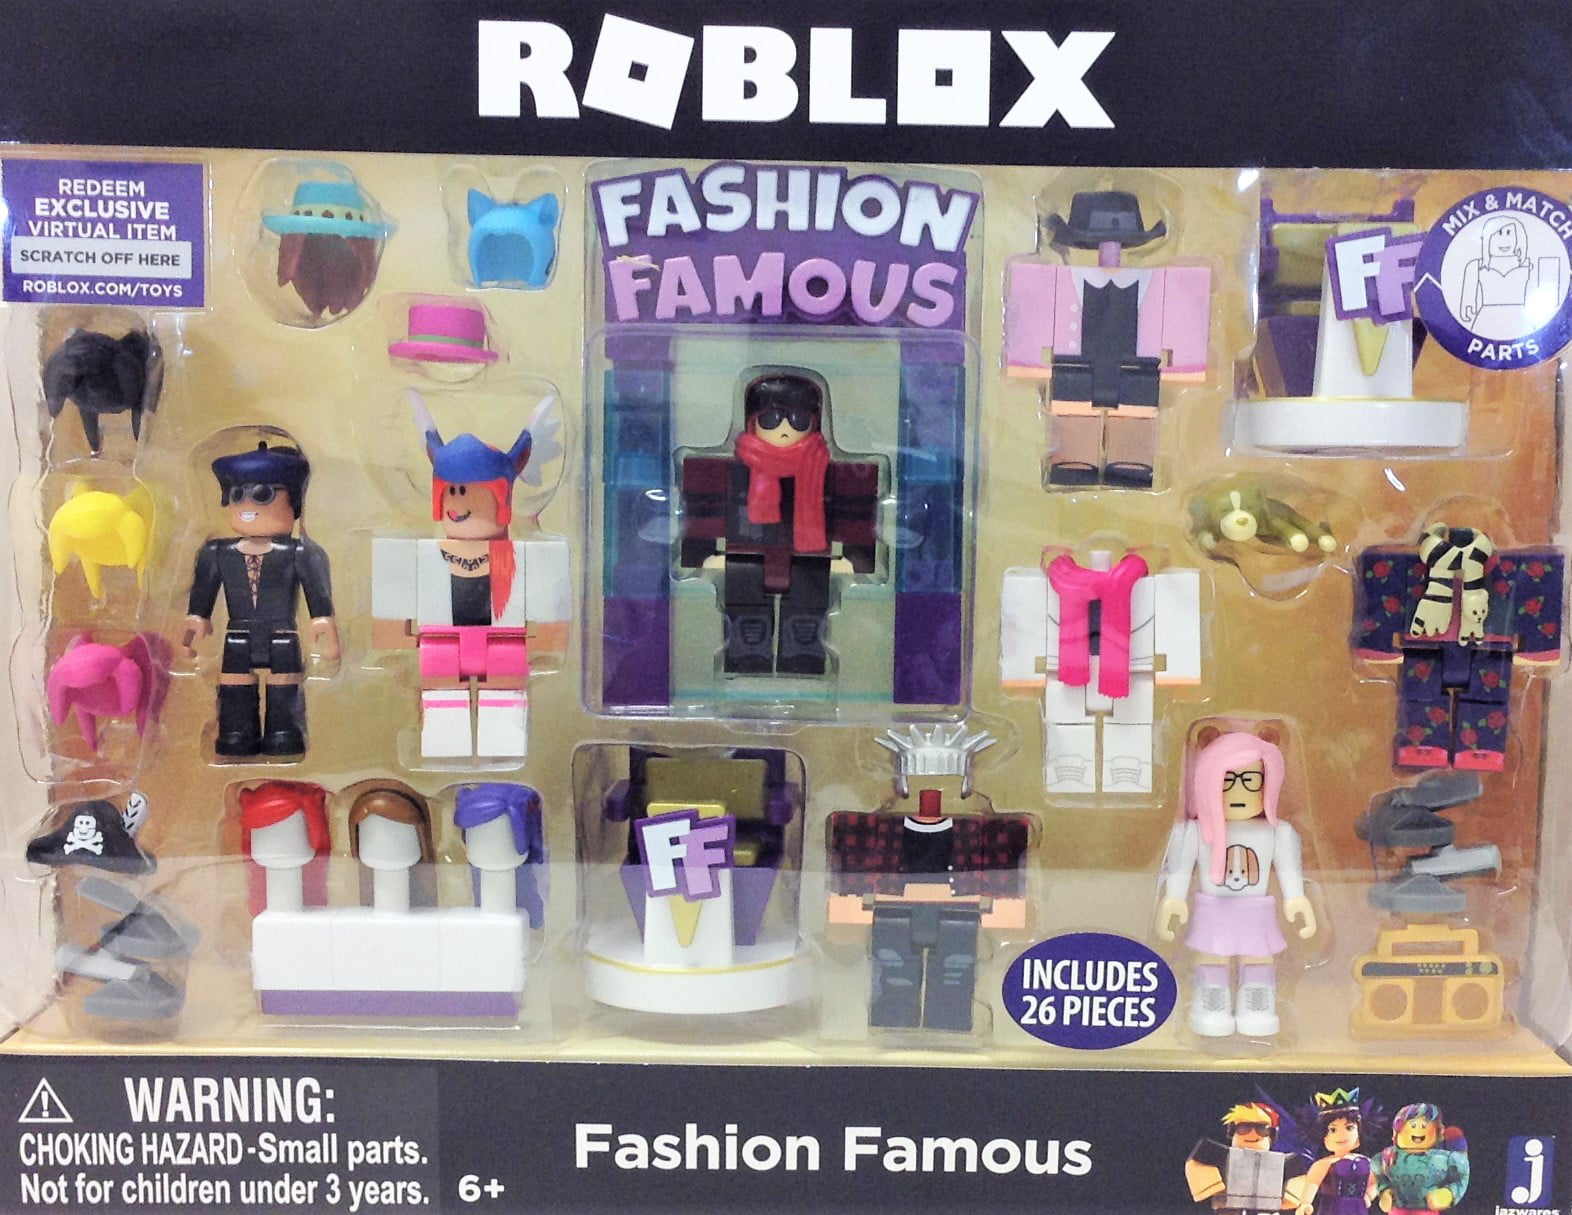 Roblox Celebrity Fashion Famous Feature Playset Walmartcom - fashion famous roblox faces